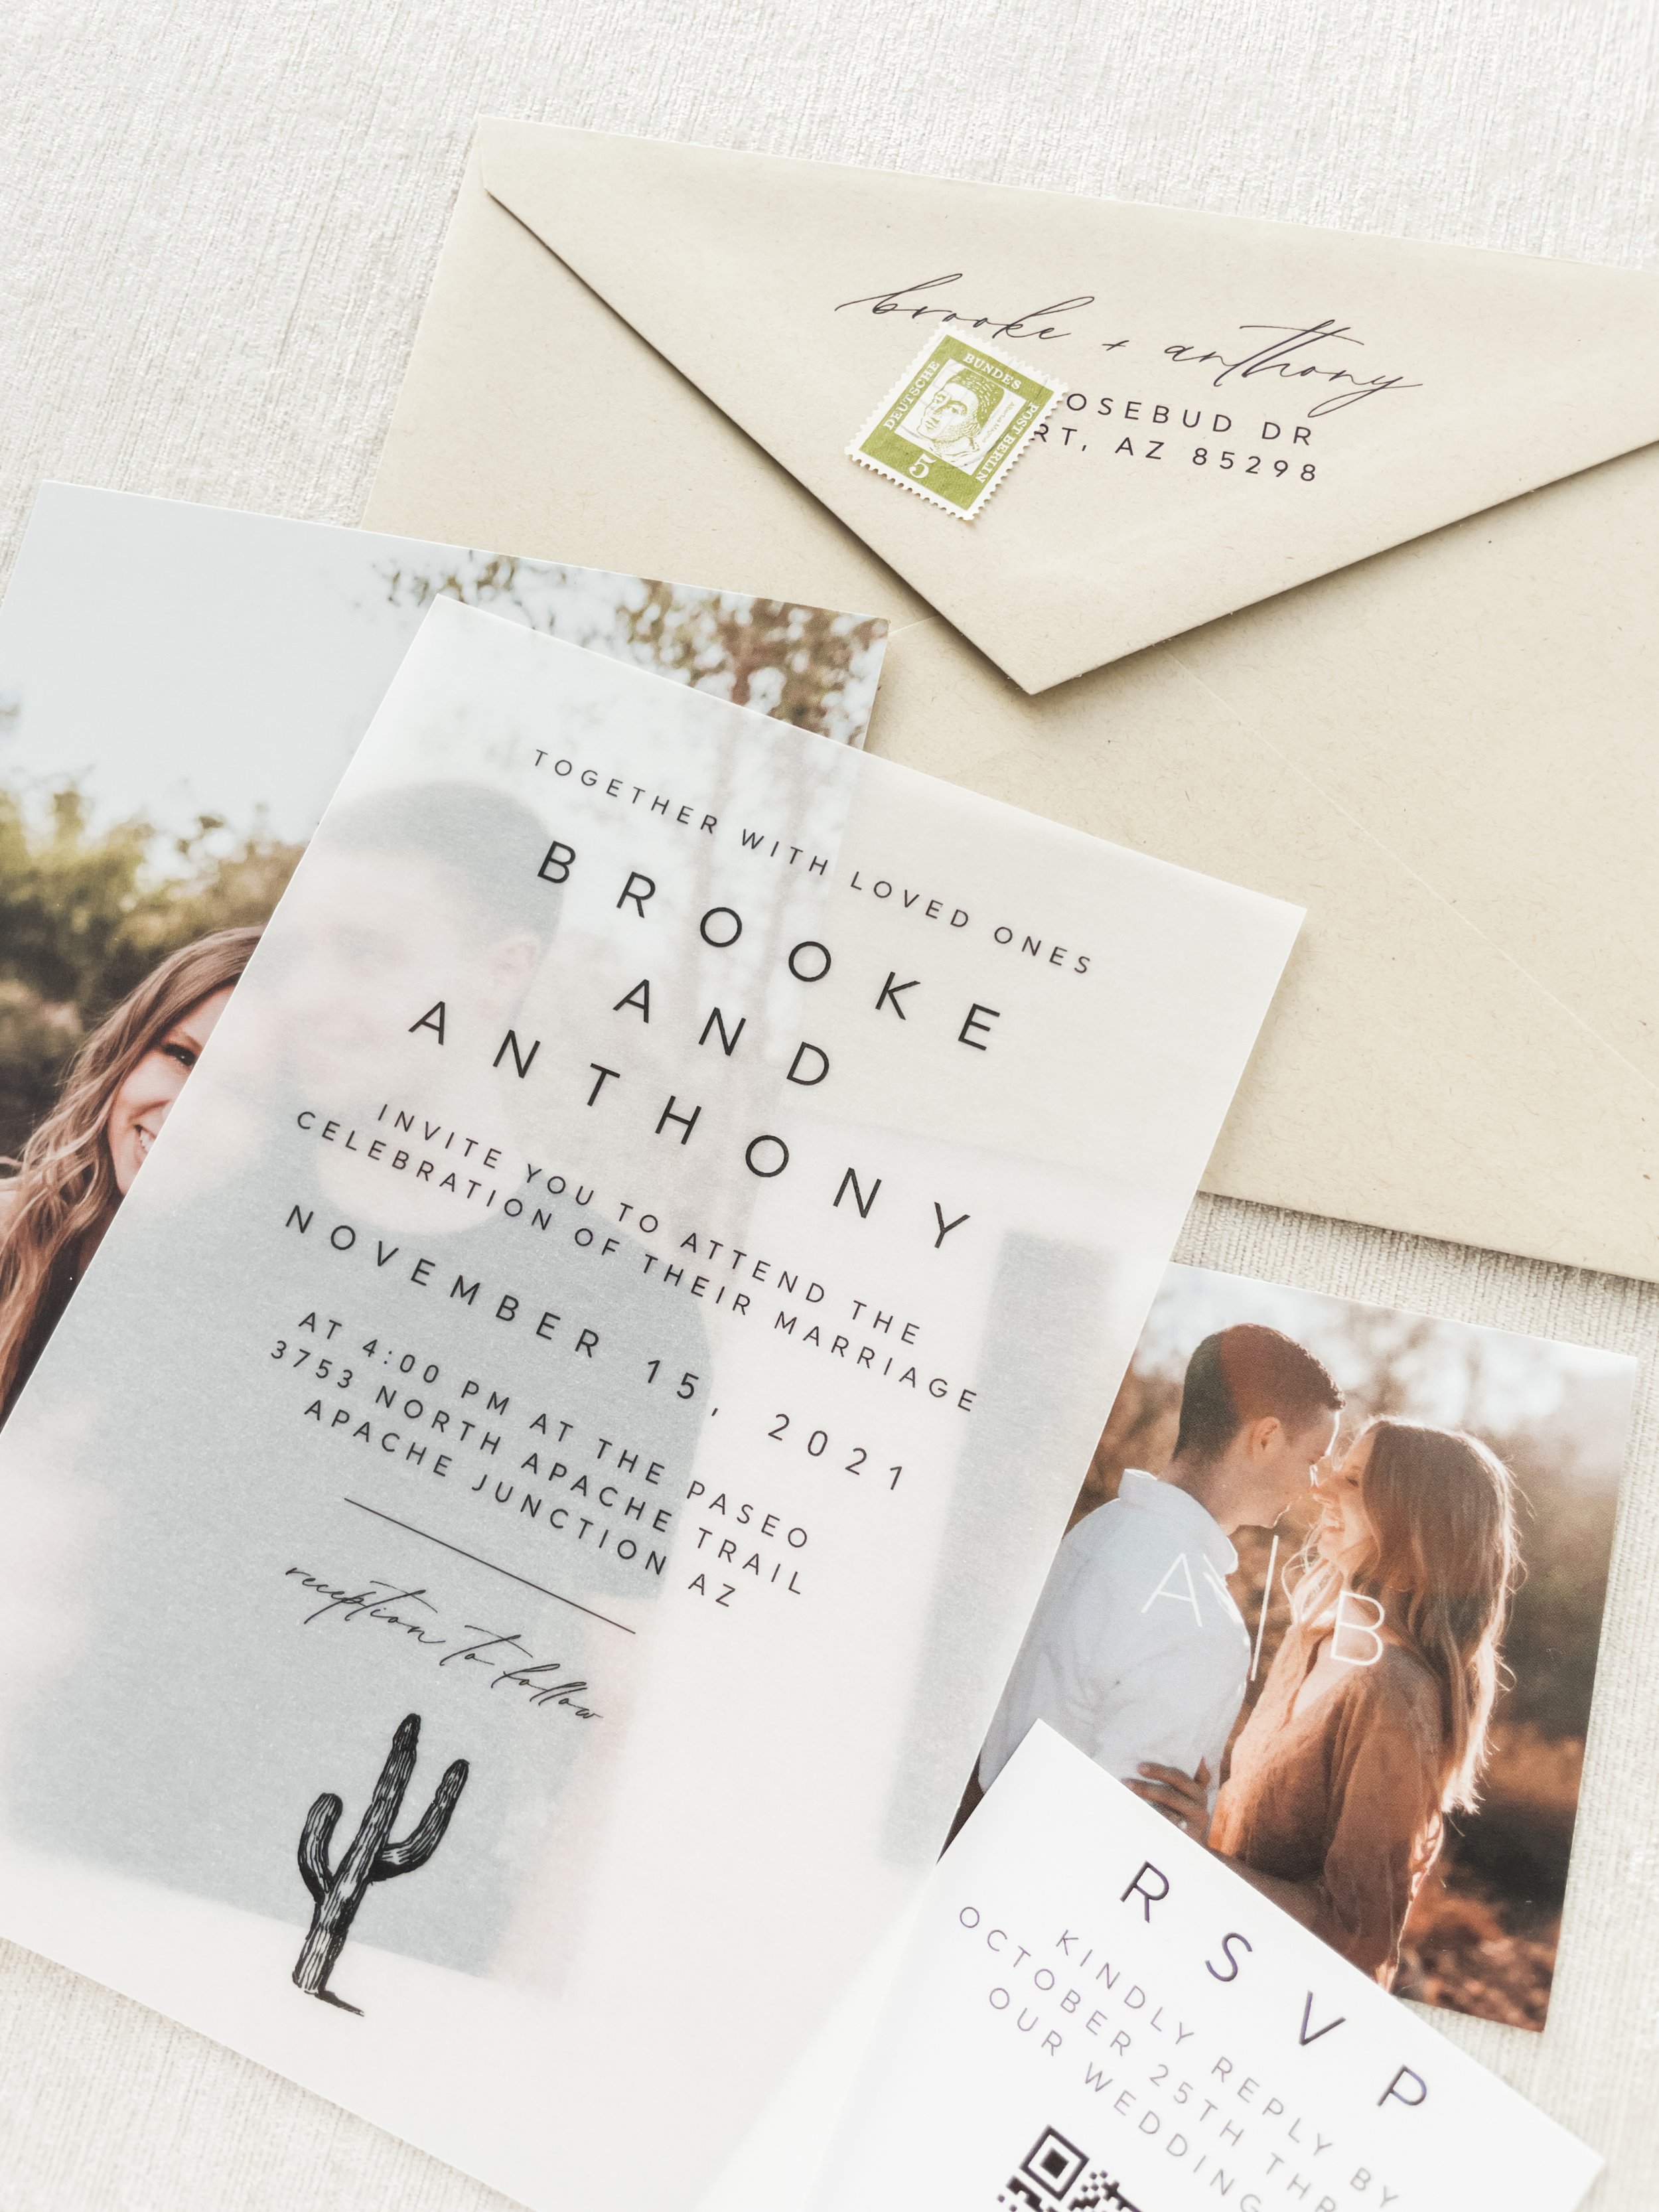 Anthology Print Wedding Invitations - Gold Foil wedding invitations - Letterpress wedding invitations - custom wedding invitation suite - wedding invitation with photo23.jpg